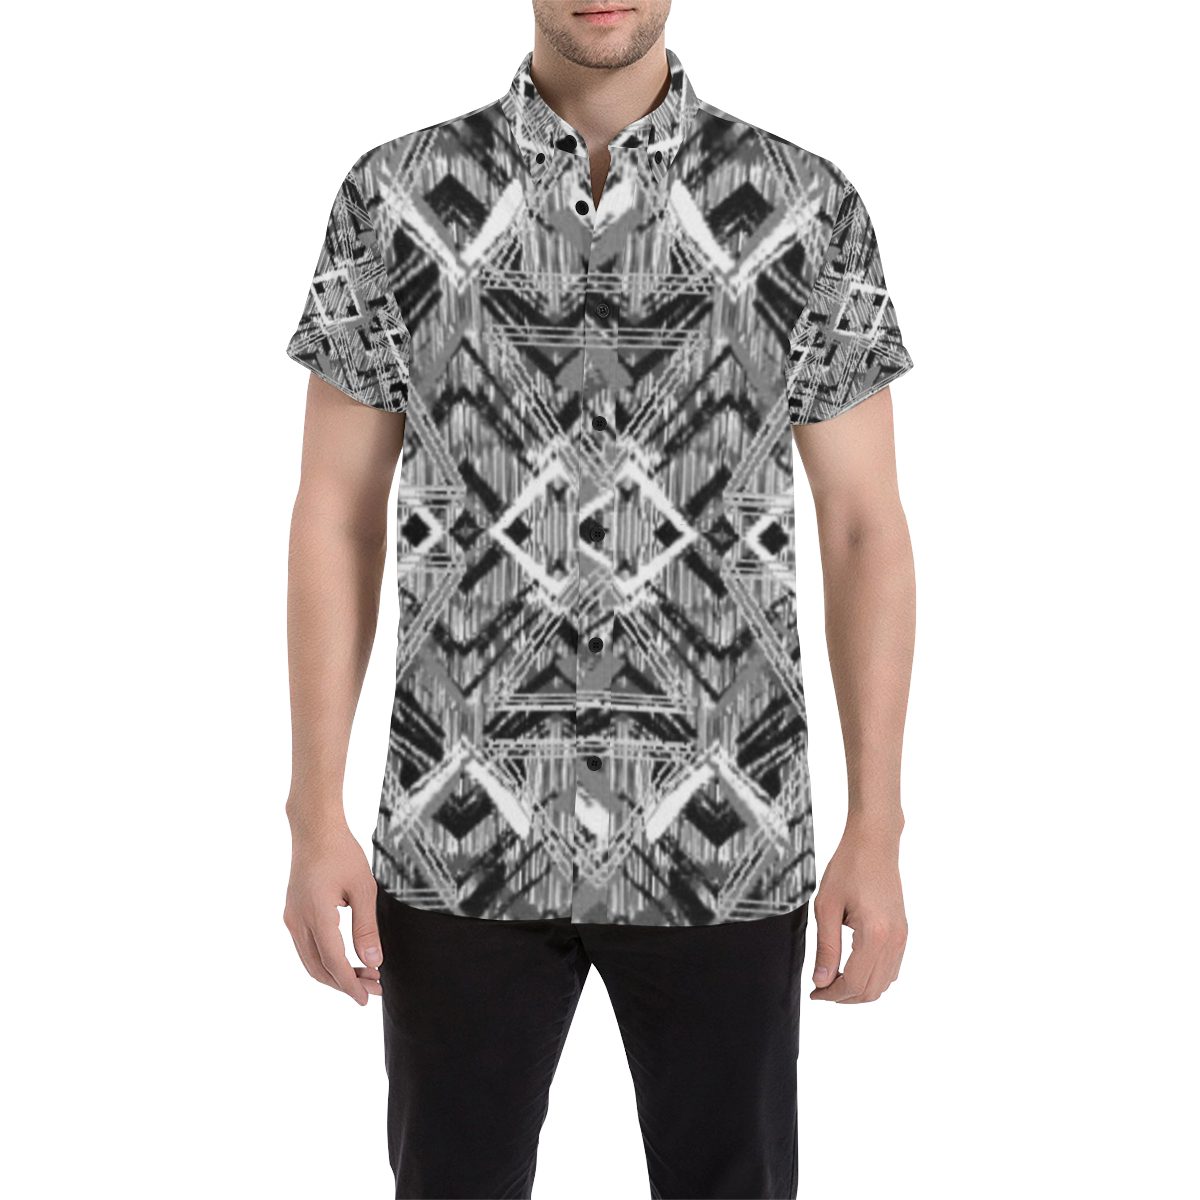 retro black and white zig zags by FlipStylez Designs Men's All Over Print Short Sleeve Shirt (Model T53)